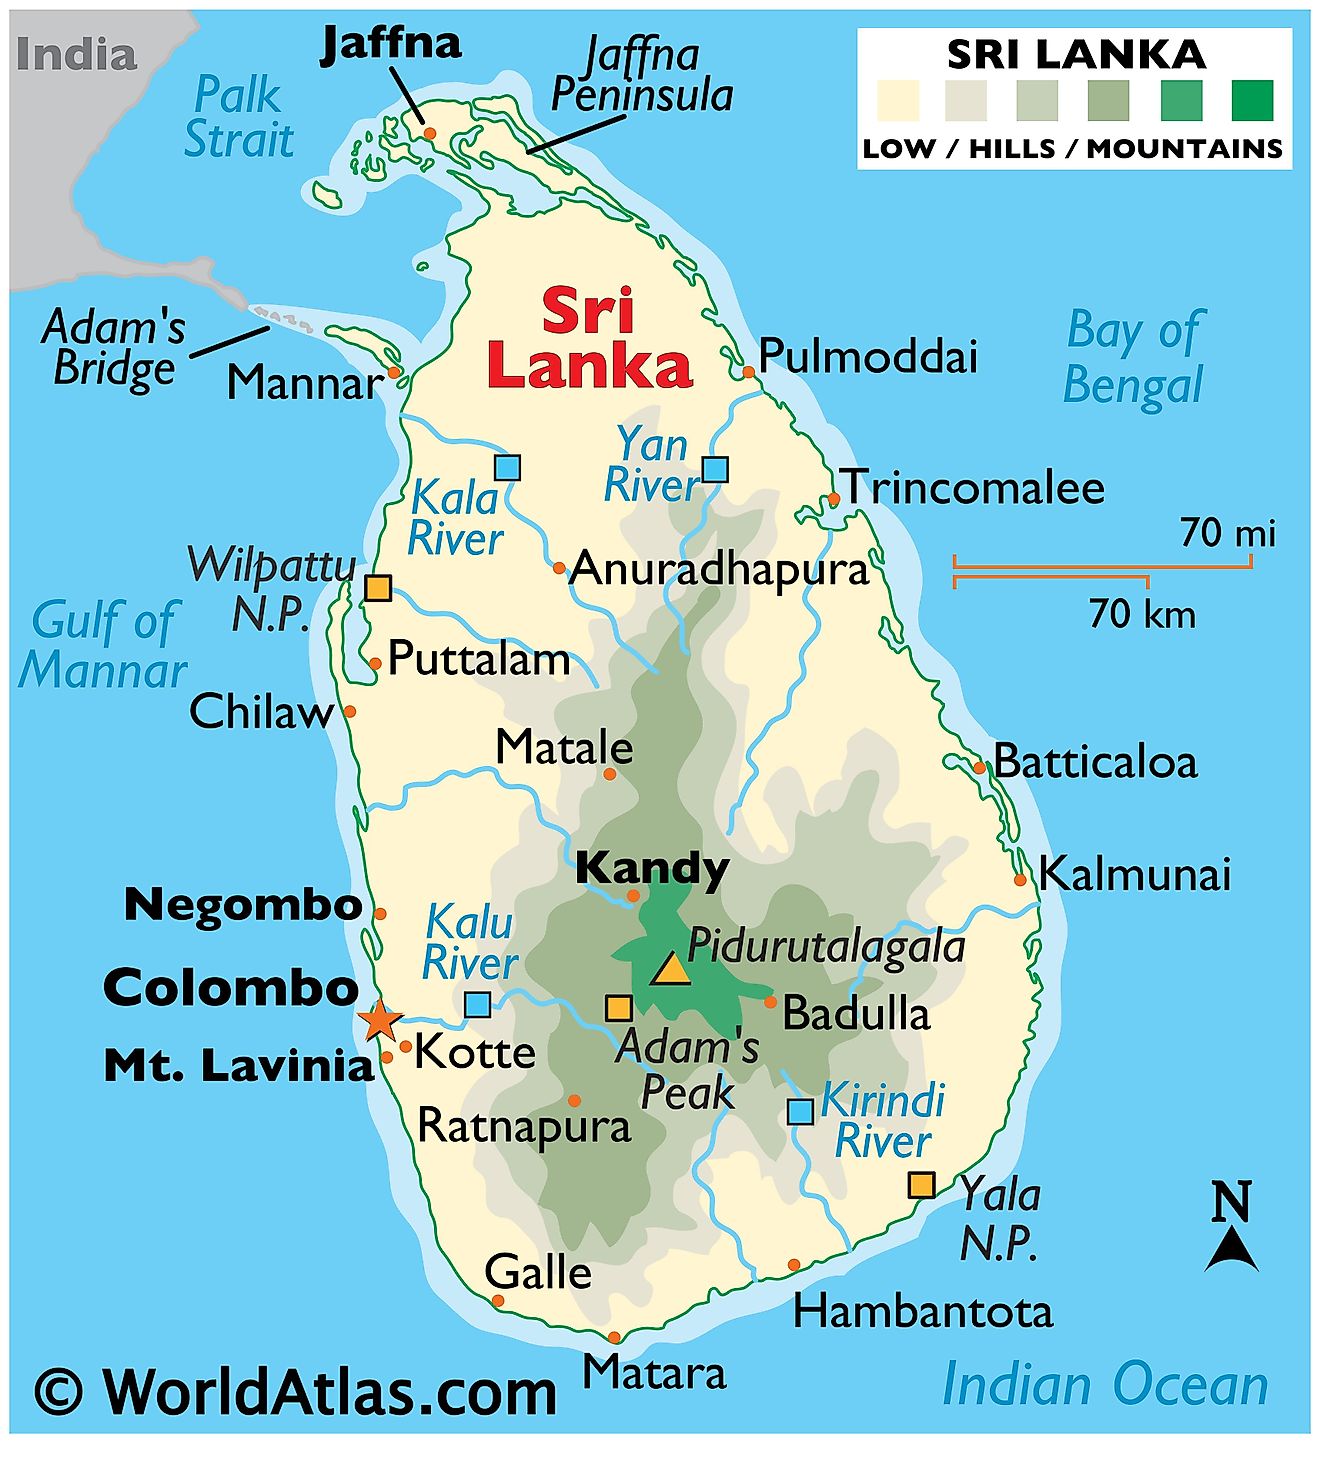 Sri Lanka Lake Map Sri Lanka Maps & Facts - World Atlas